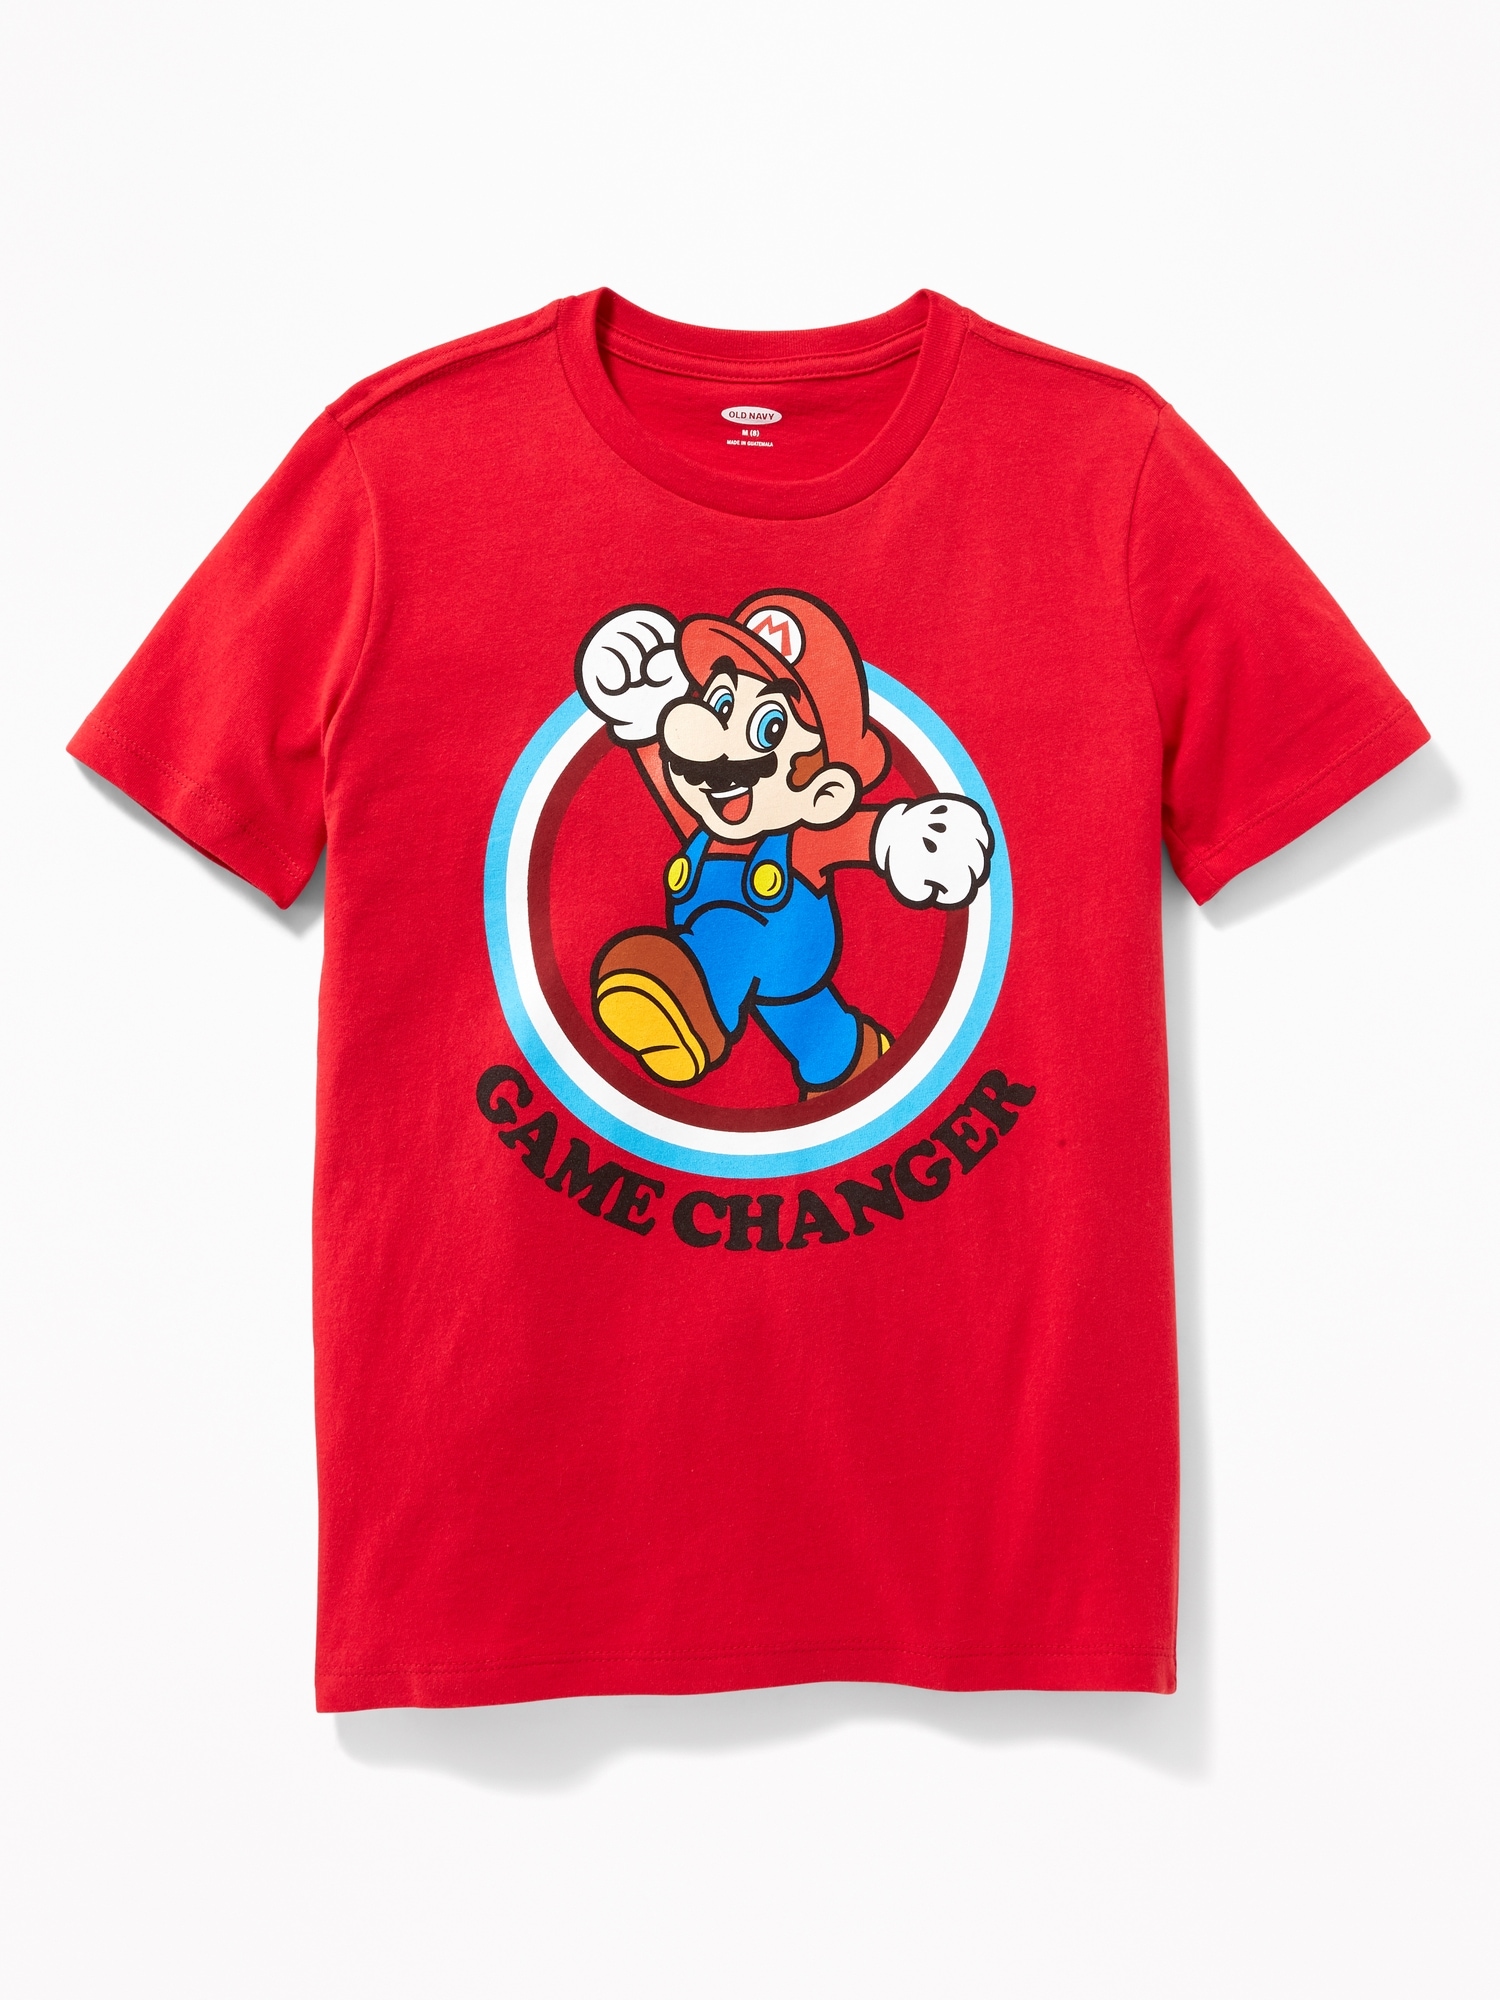 Super Mario Shirt Outlet Here, Save 58% | jlcatj.gob.mx